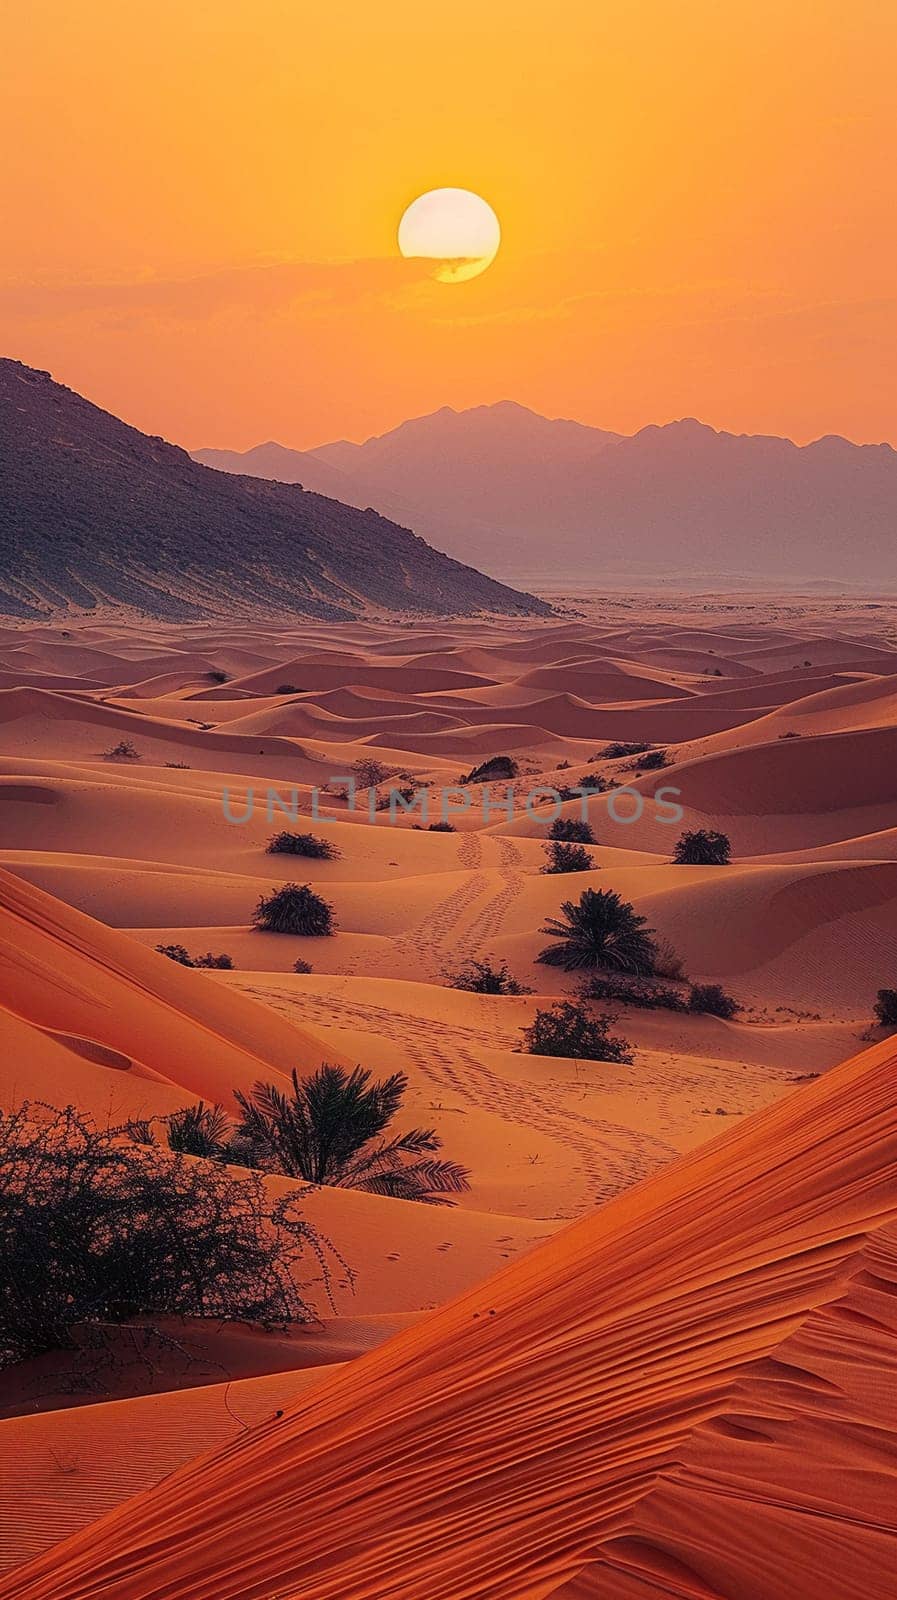 Soft sand dunes at sunrise, providing a serene and natural backdrop.